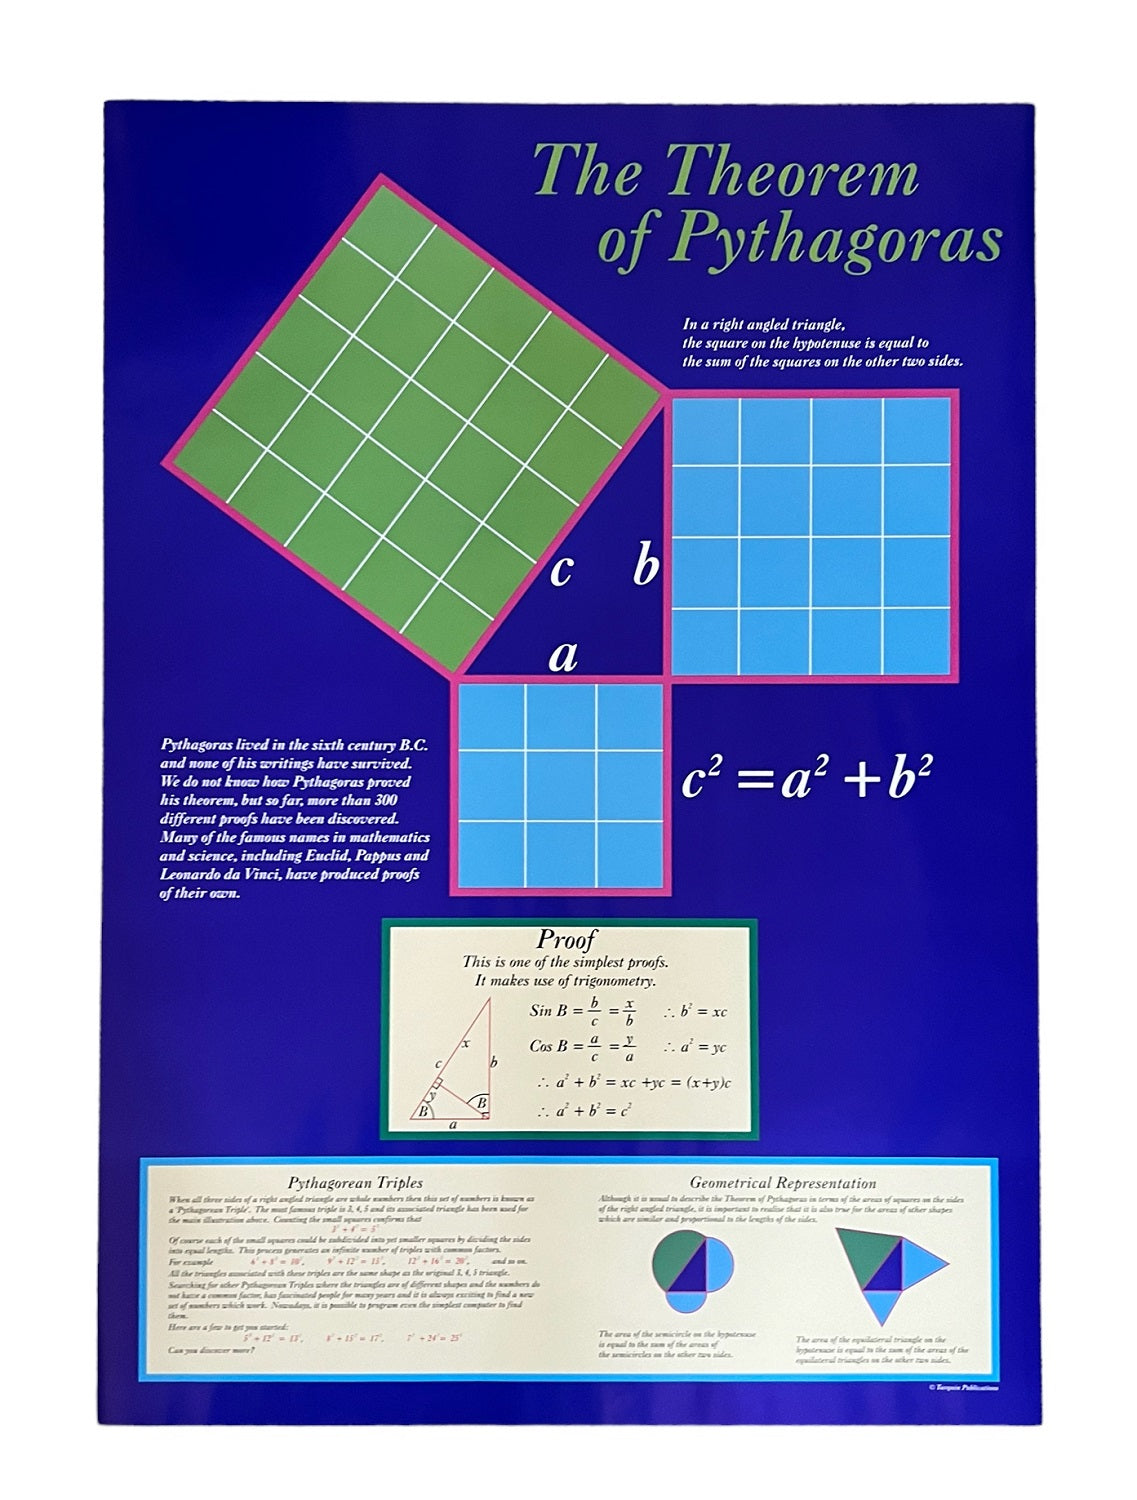 The Theorem of Pythagoras Poster